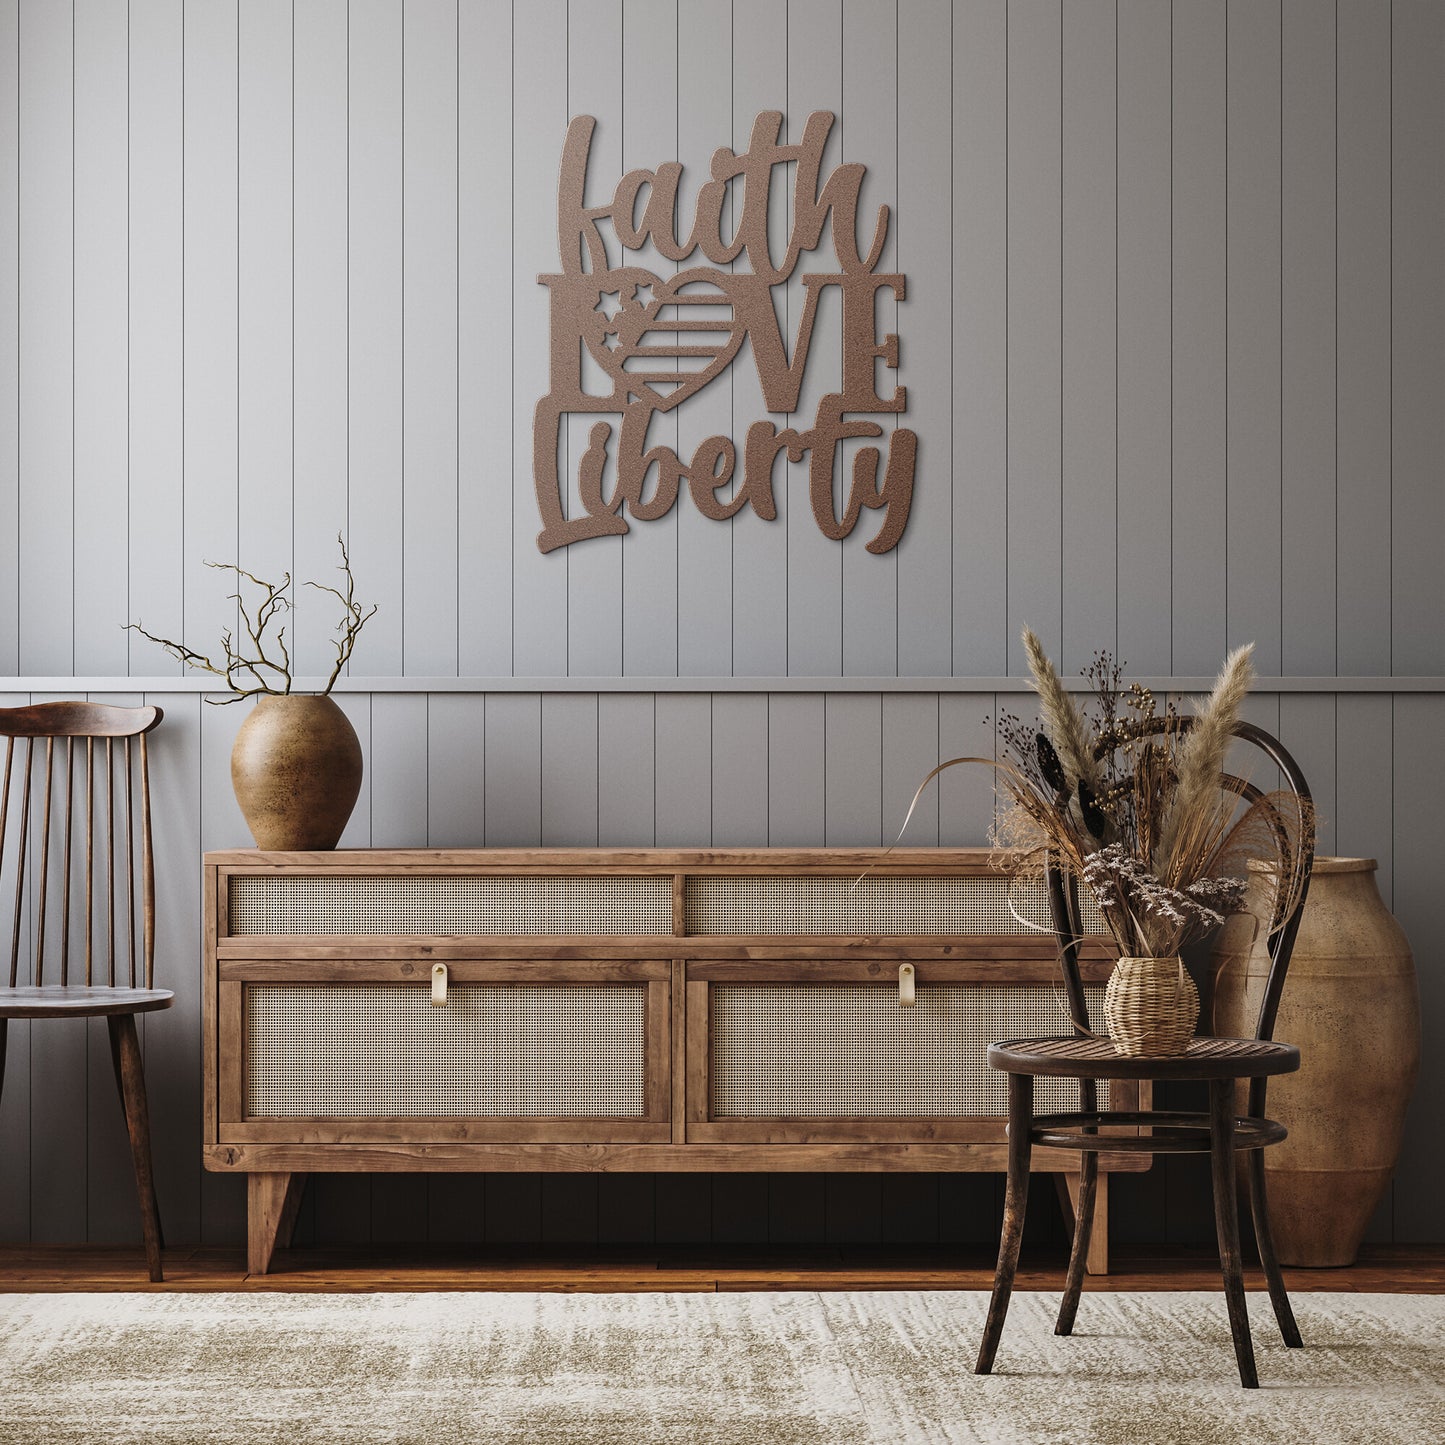 Faith, Love , Liberty - Metal Art/Sign, Religious Patriotic Wall Home Decor, Christian Metal Sign, Bible Liberty Sign, Metal Cross Sign